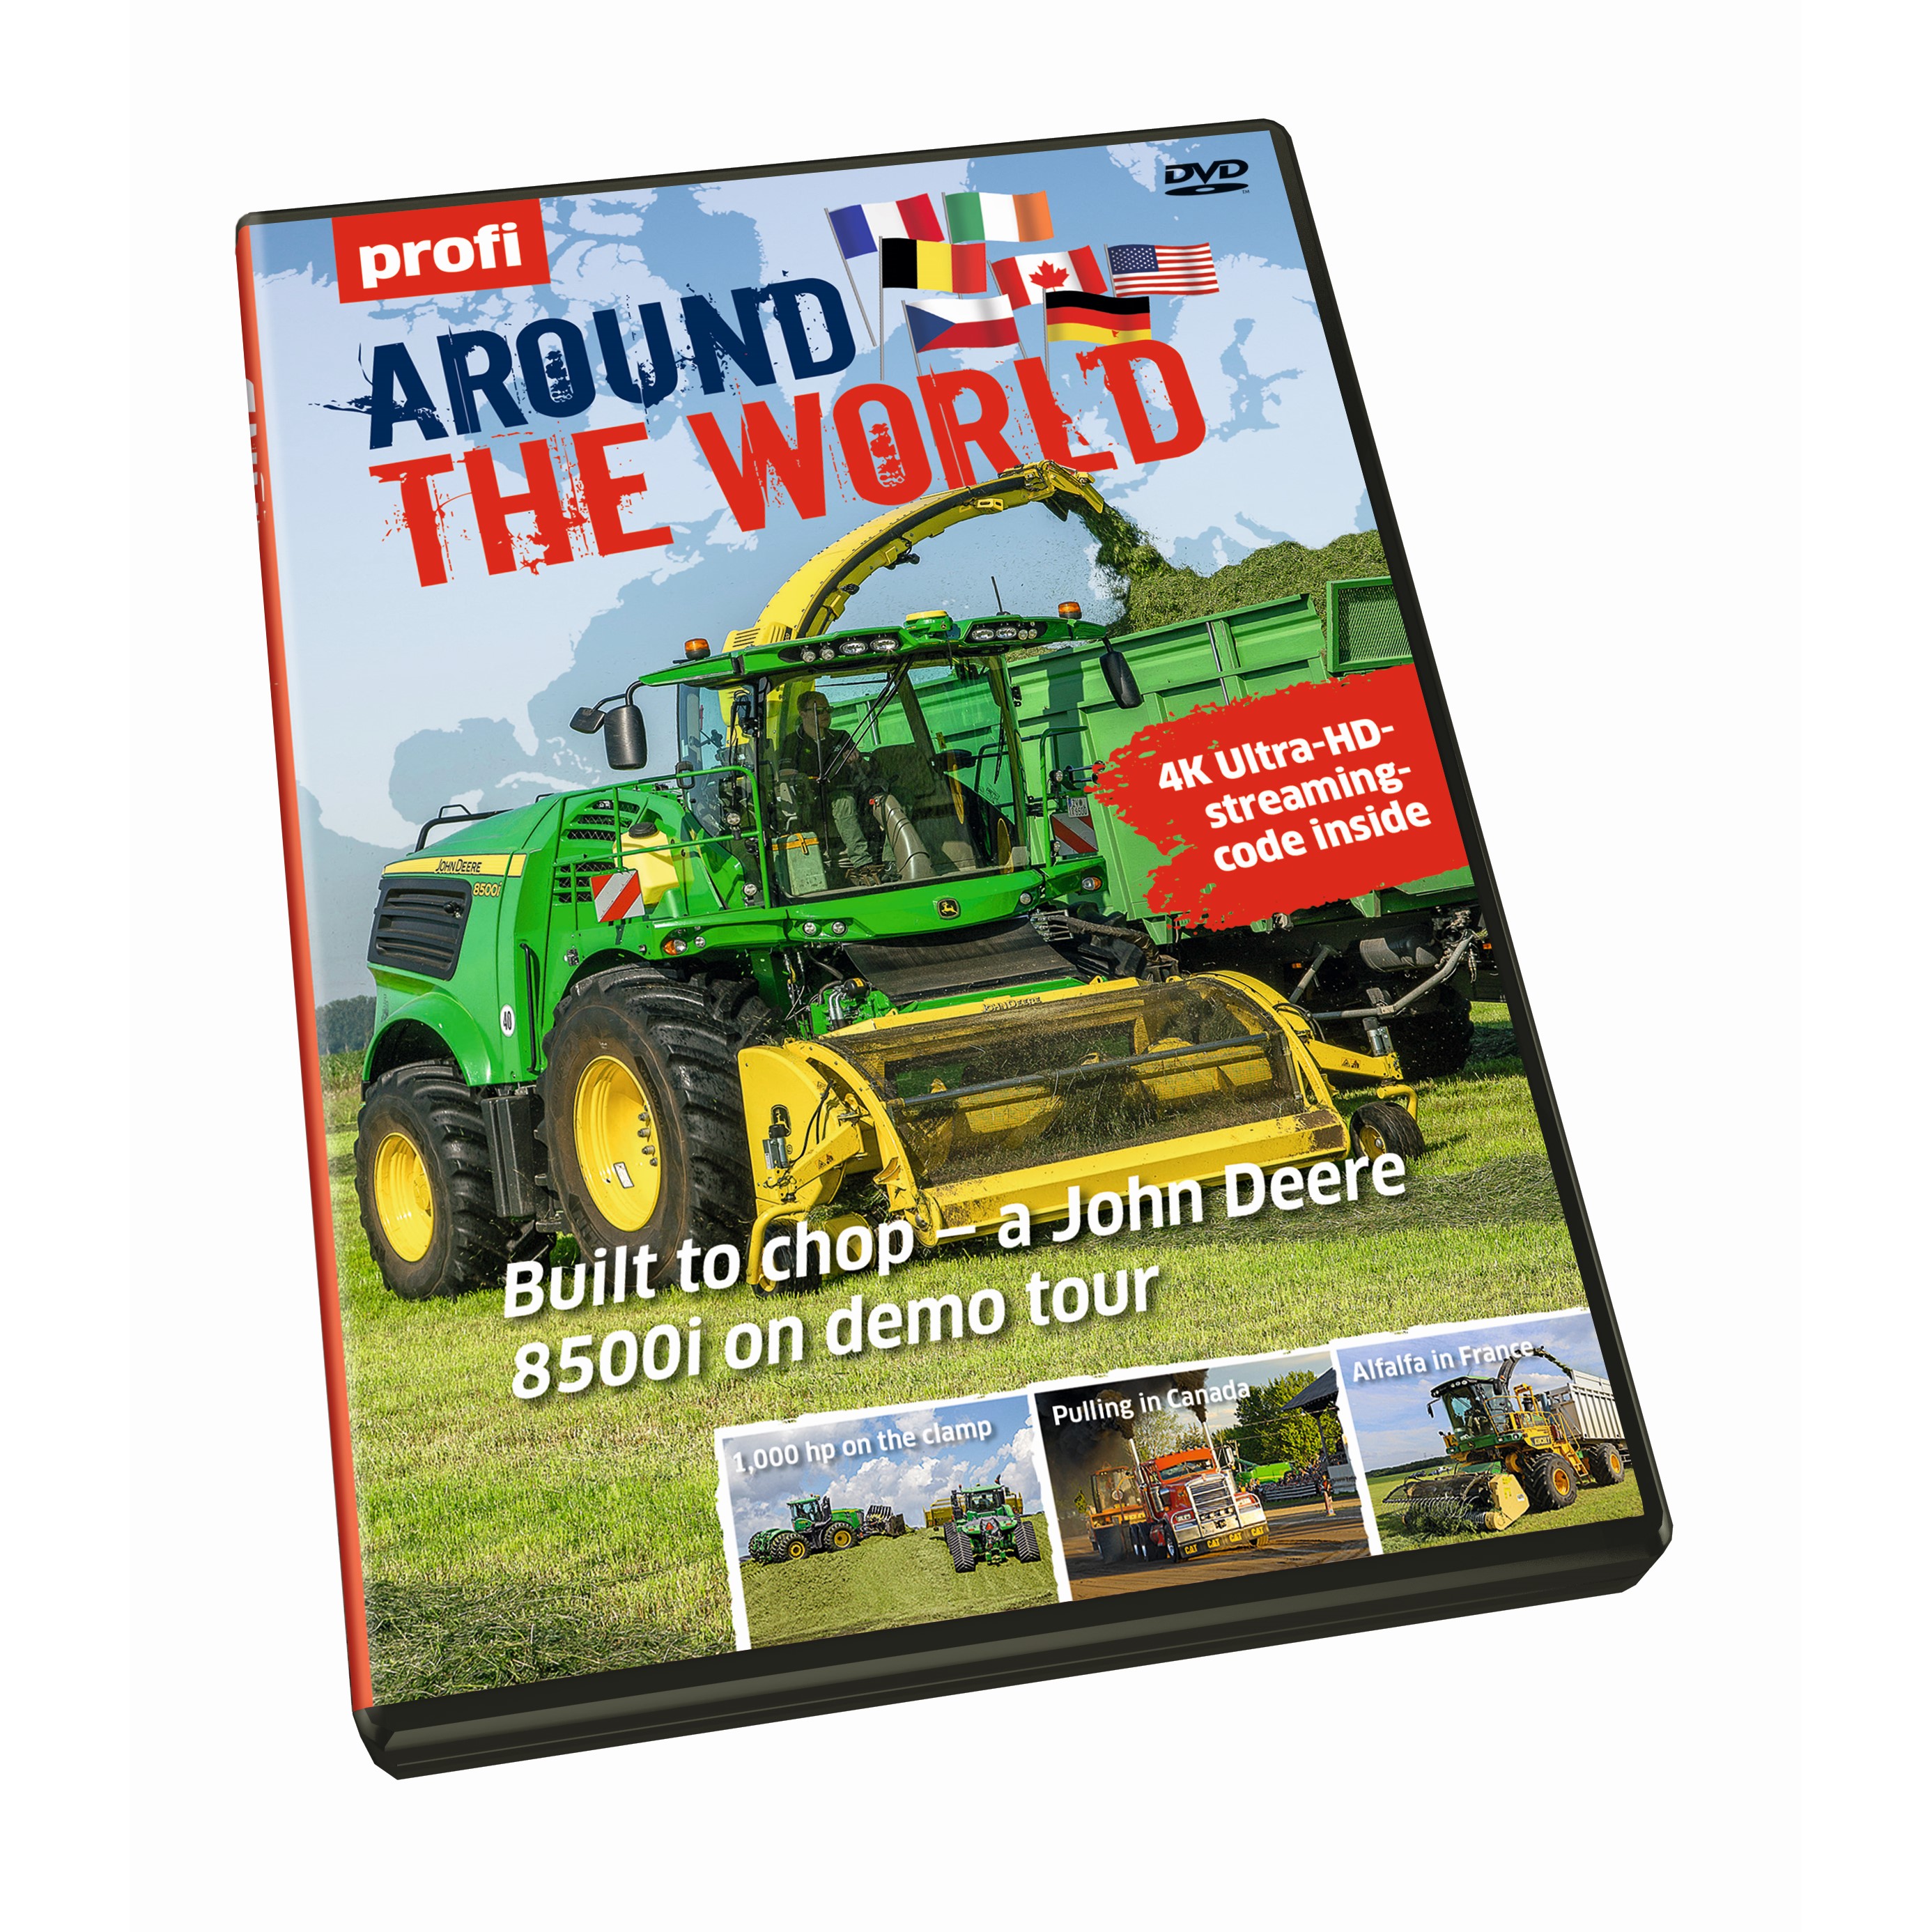 Around the World DVD - Forage Harvesting Adventure